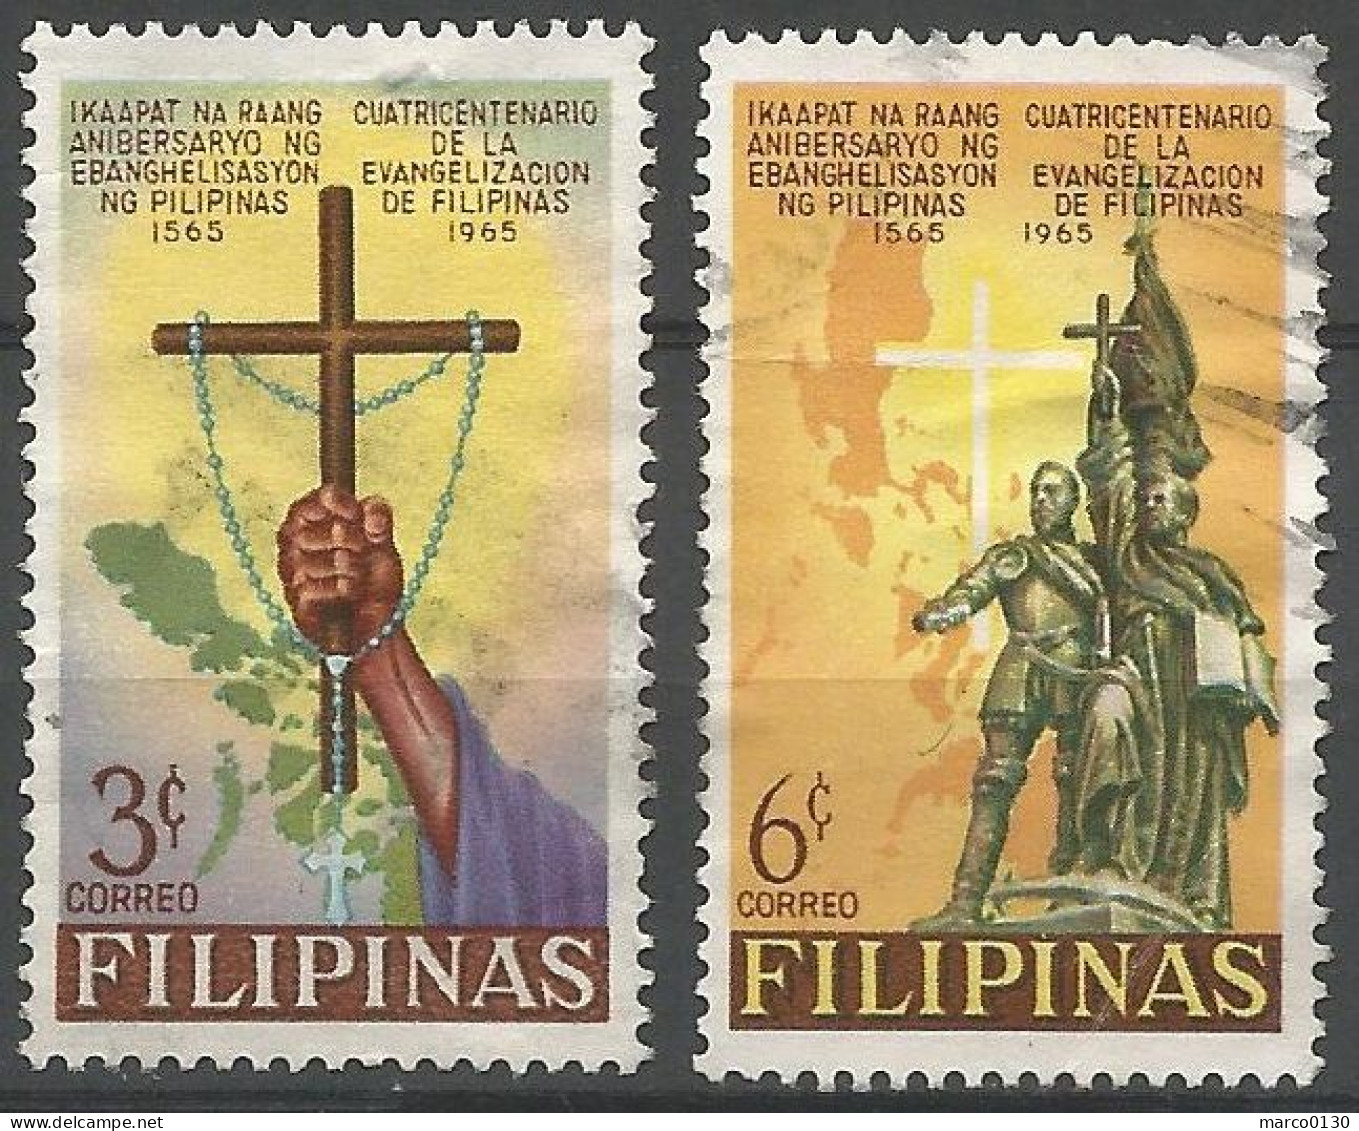 PHILIPPINES N° 628 + N° 629 OBLITERE - Philippines